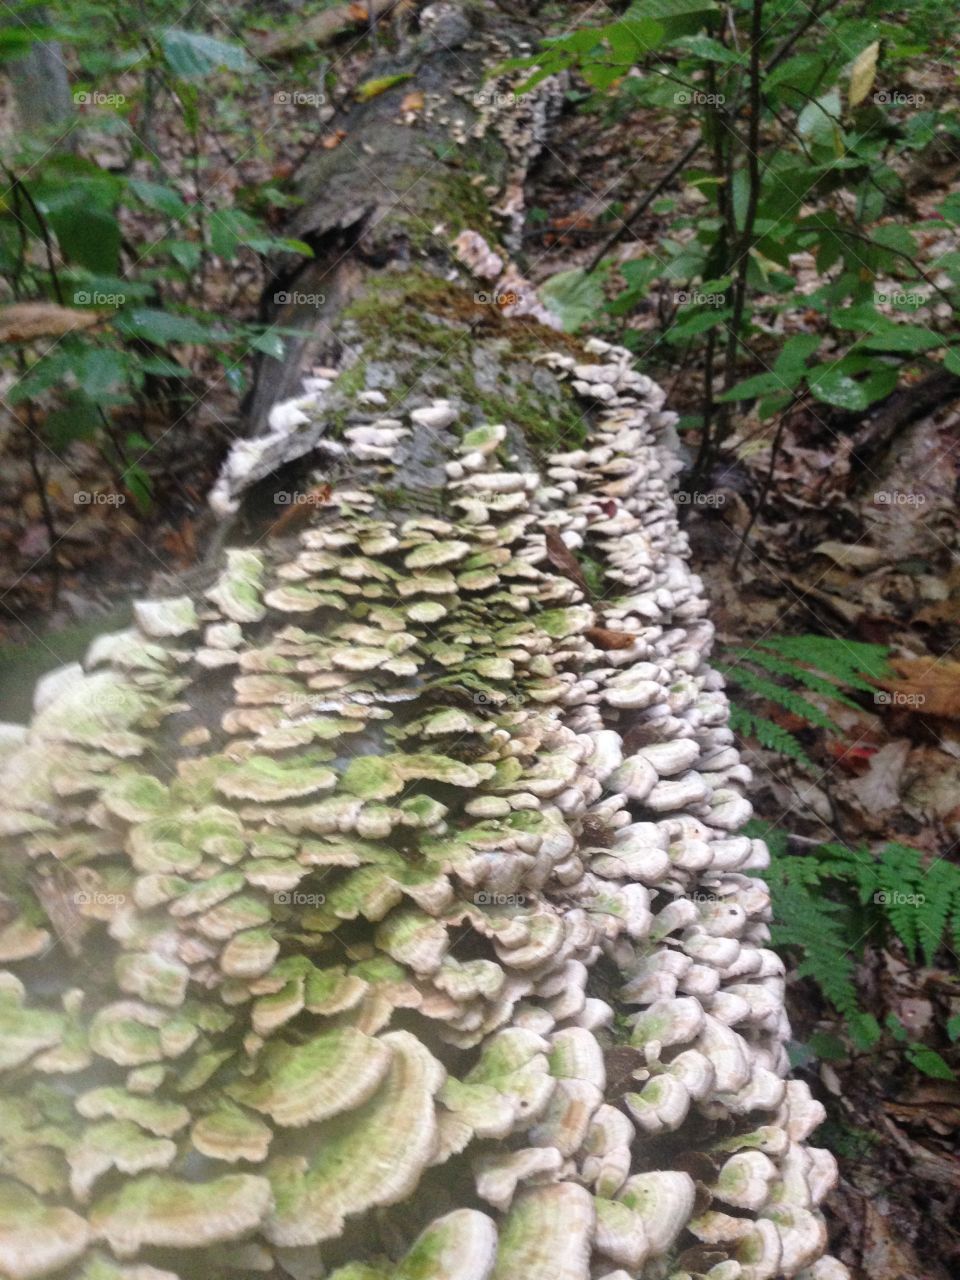 Close up of fungi